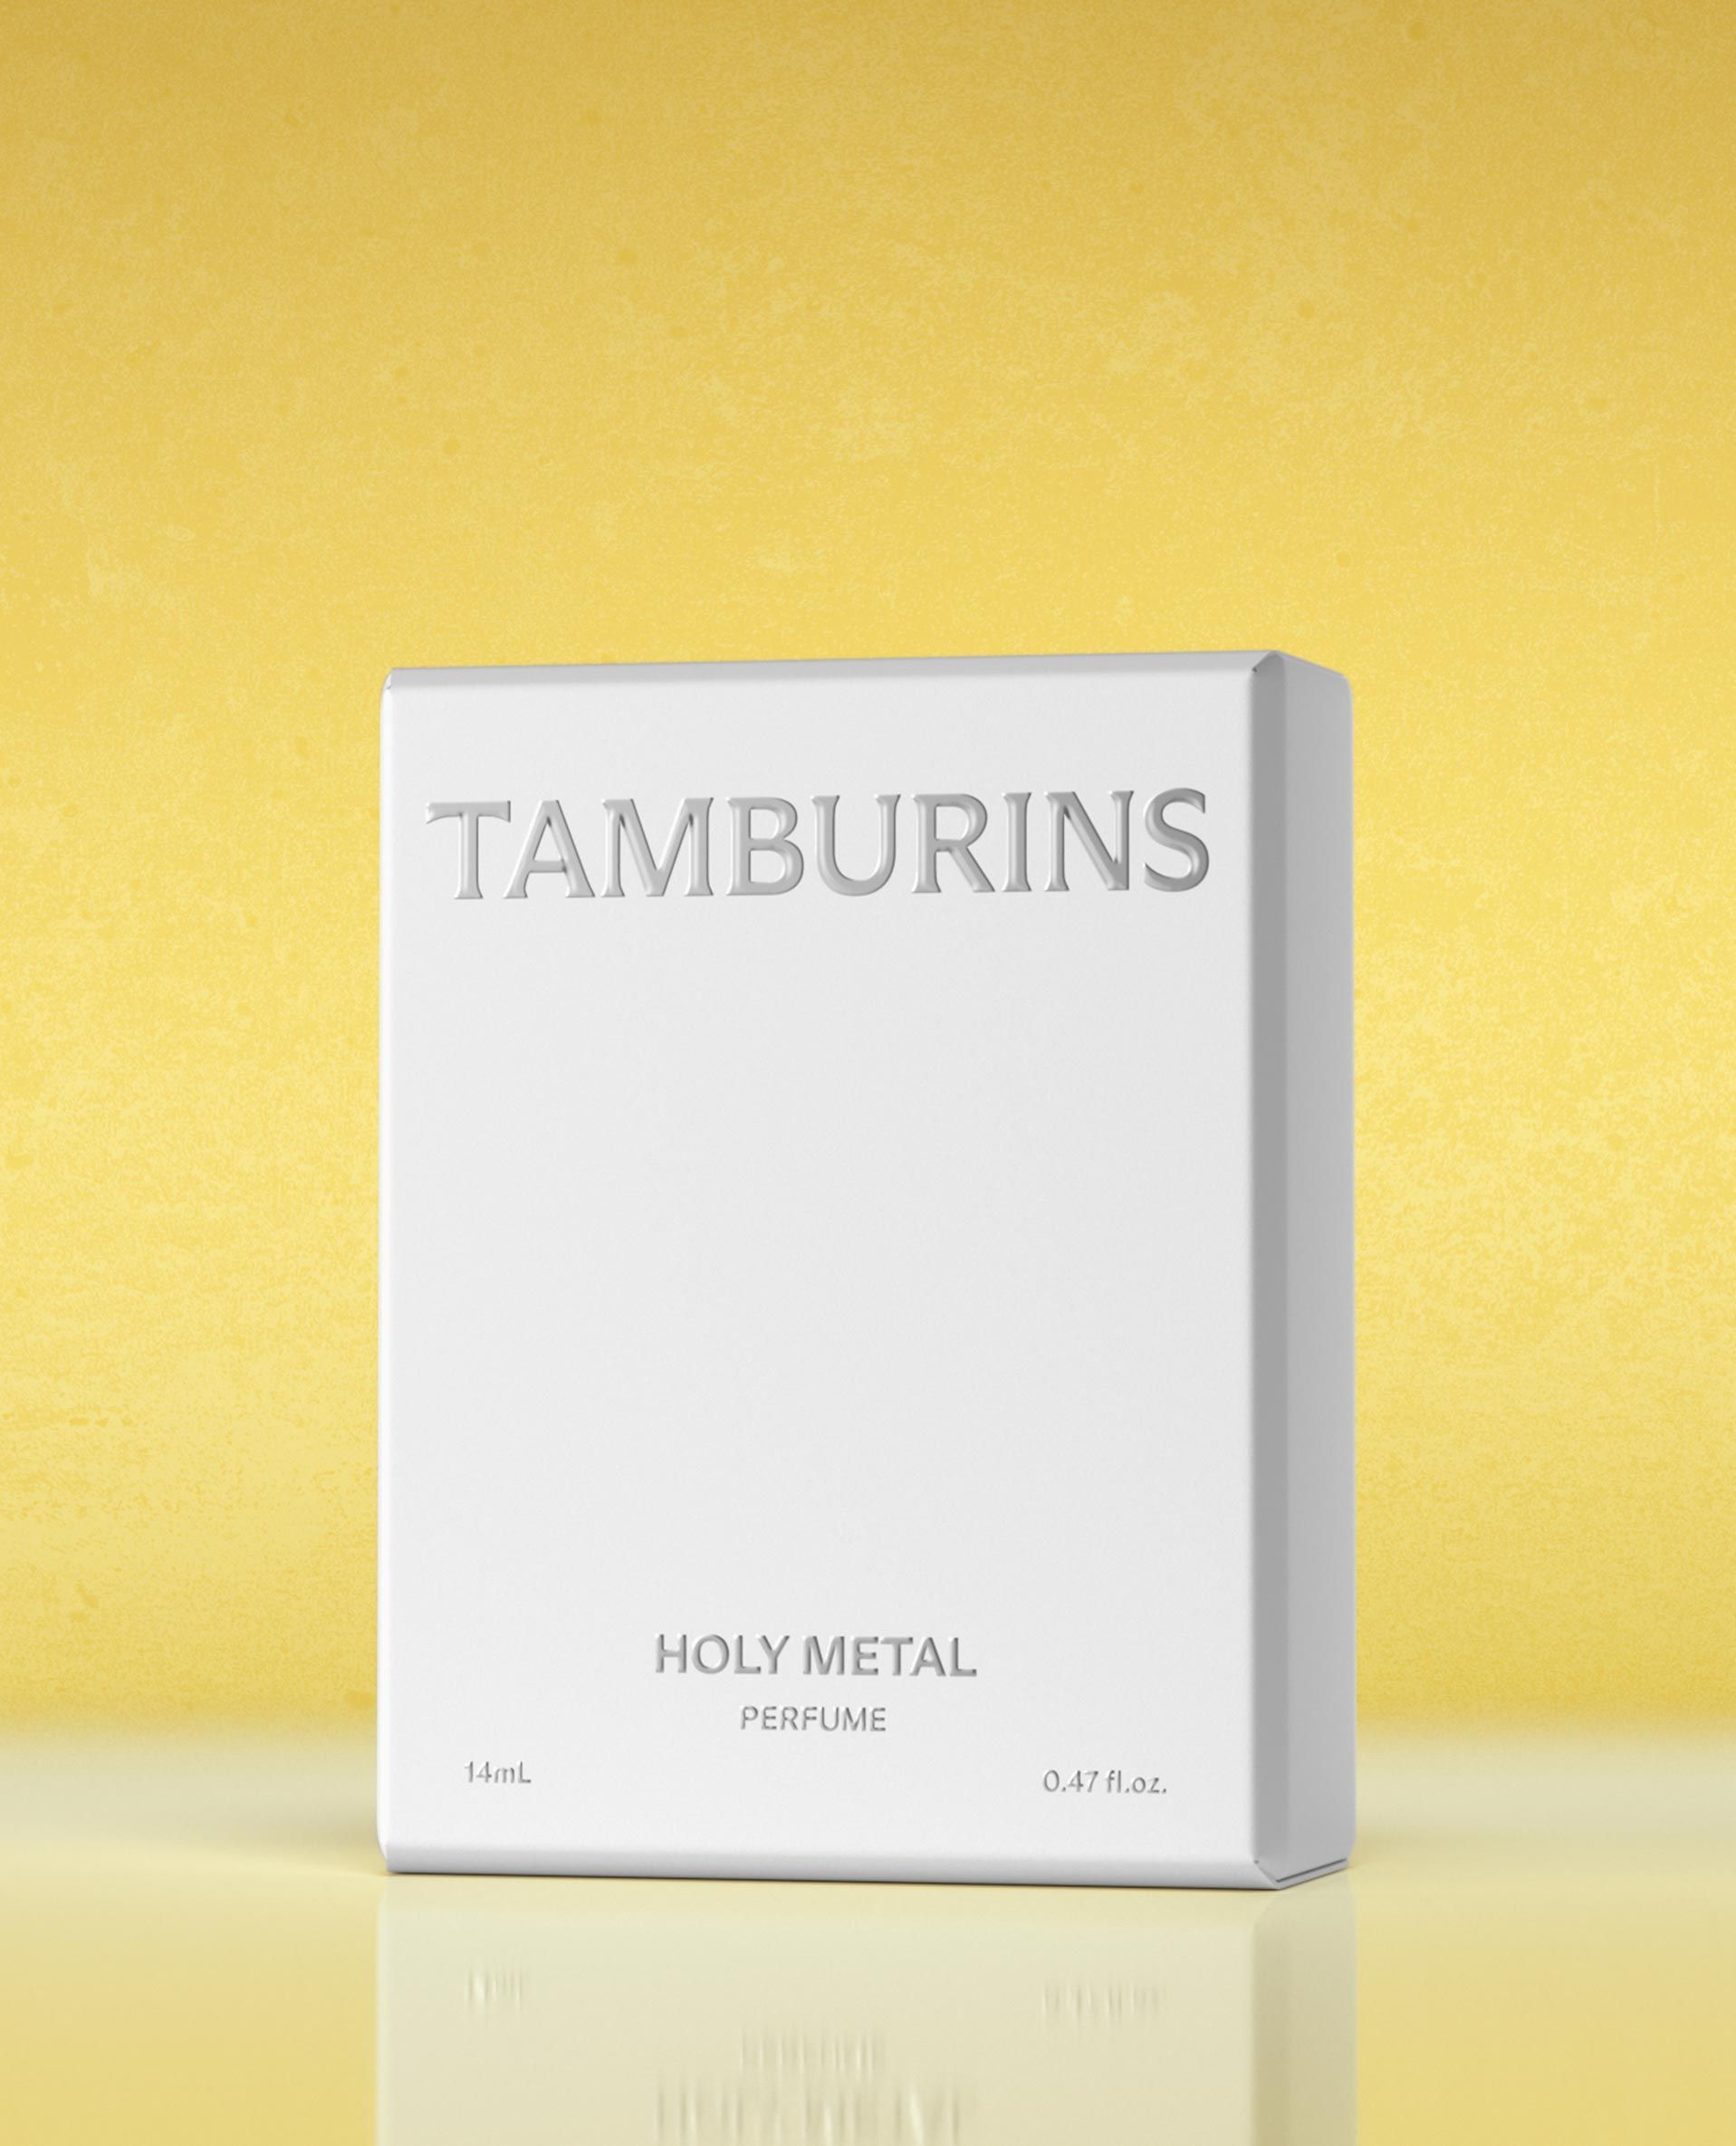 a box of TAMBURINS THE EGG PERFUME PUMKTAMBURINS on a yellow background